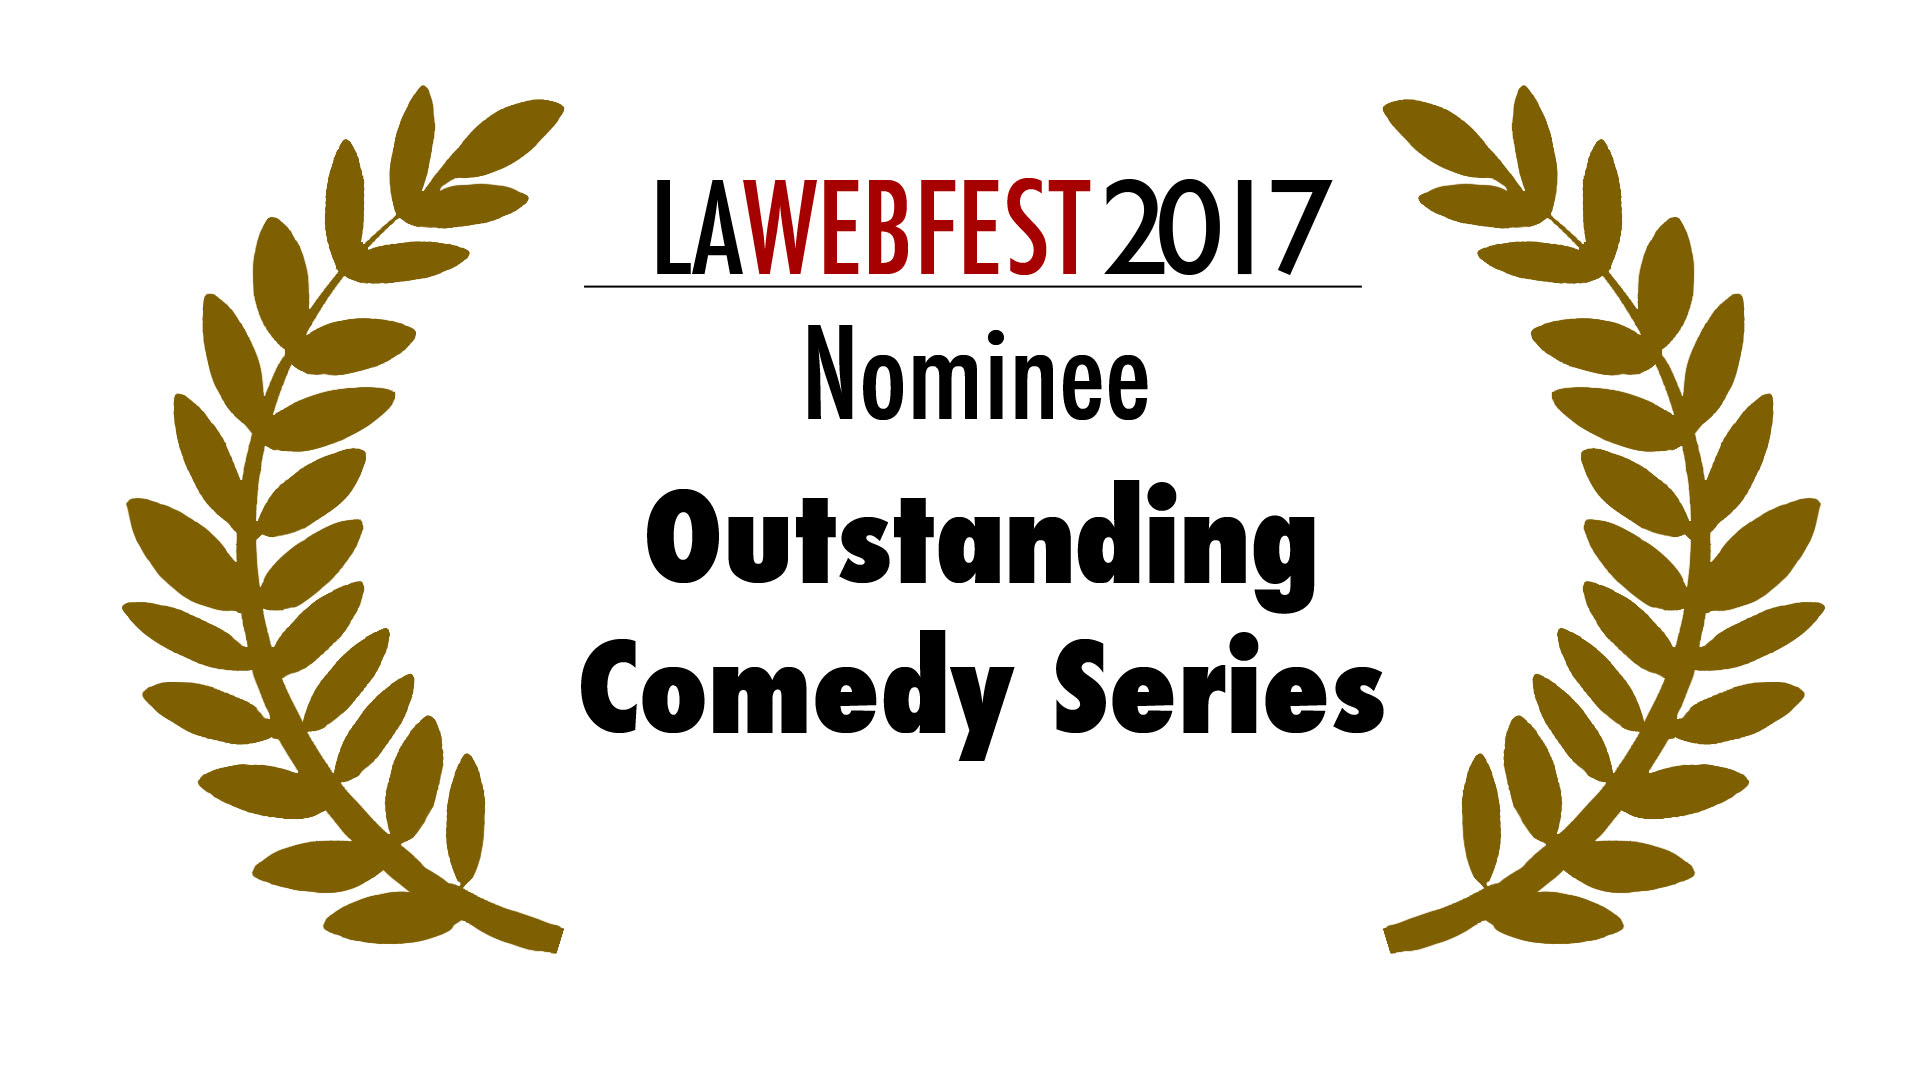 LA Webfest 2017 Comedy Series nominee